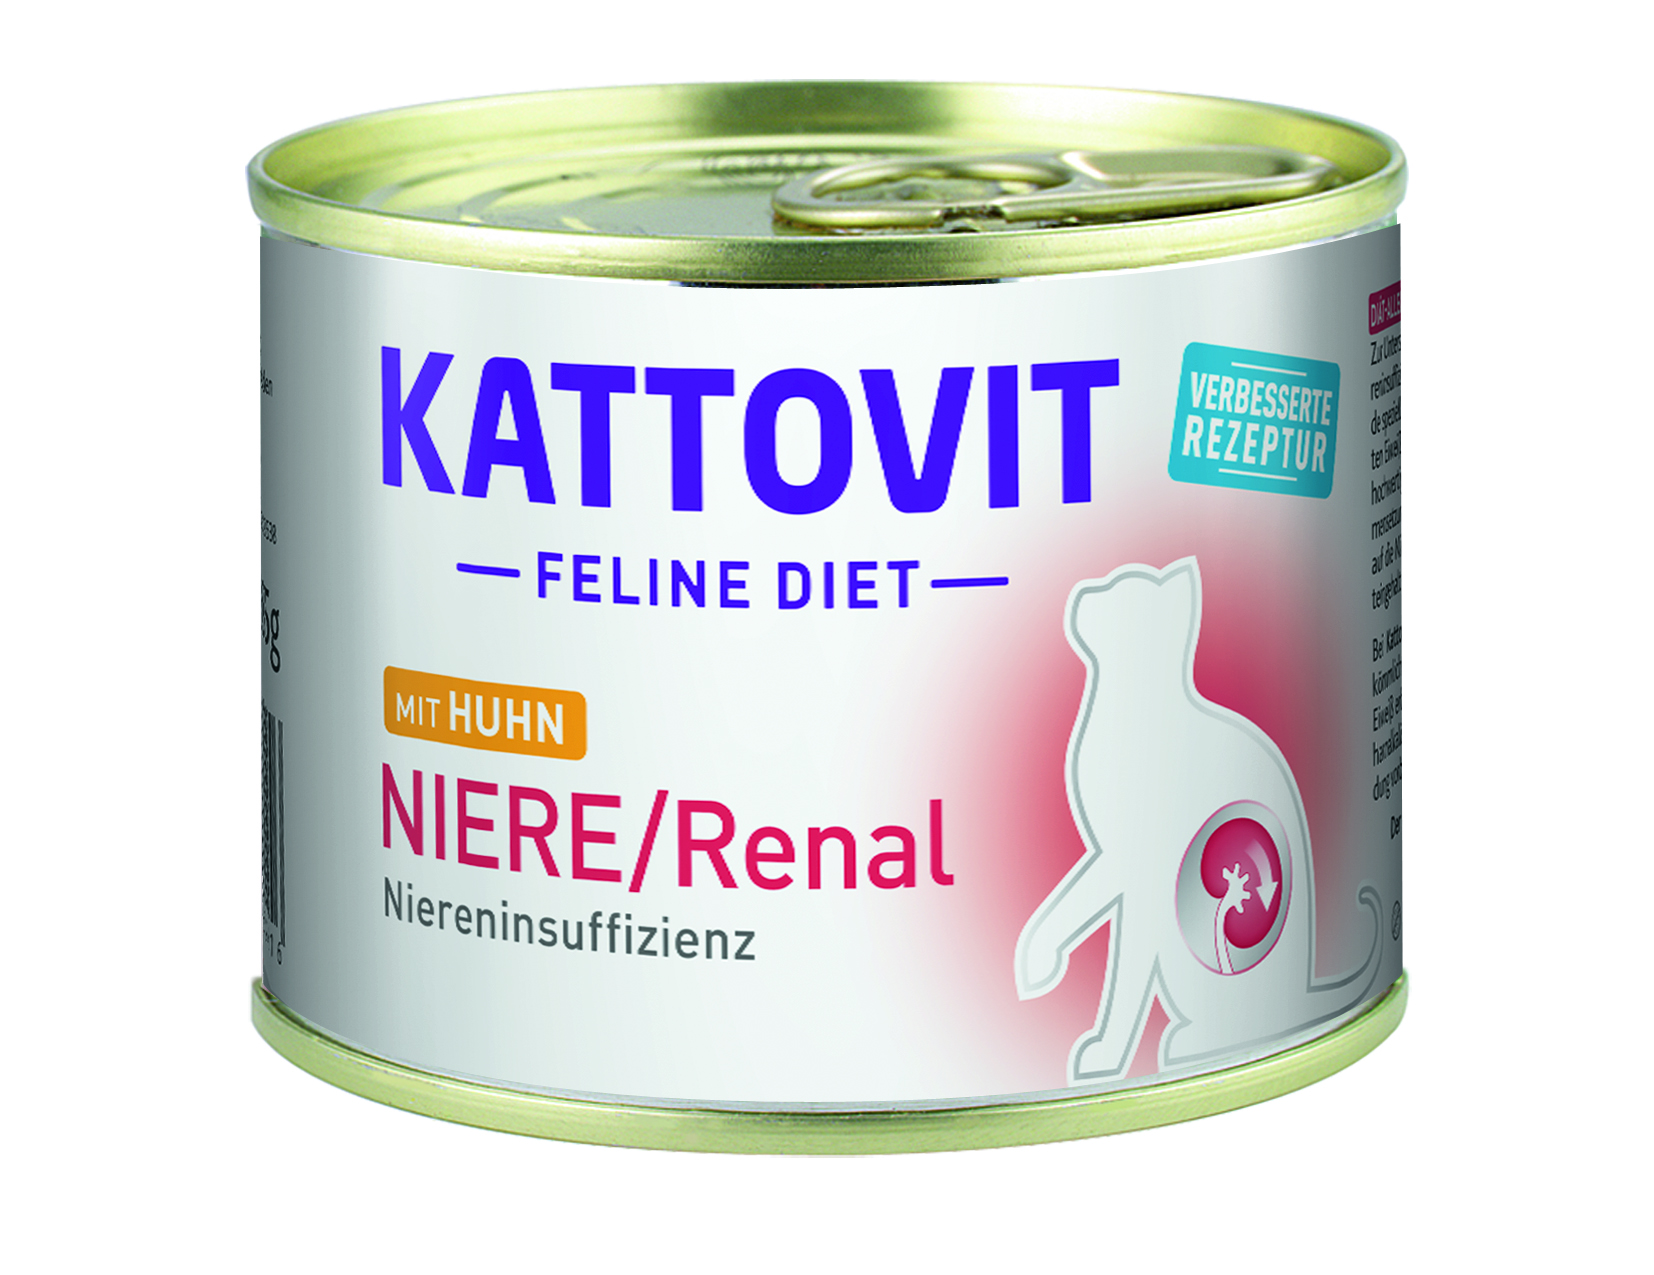 Kattovit Feline Diet Niere/Renal Huhn 185g